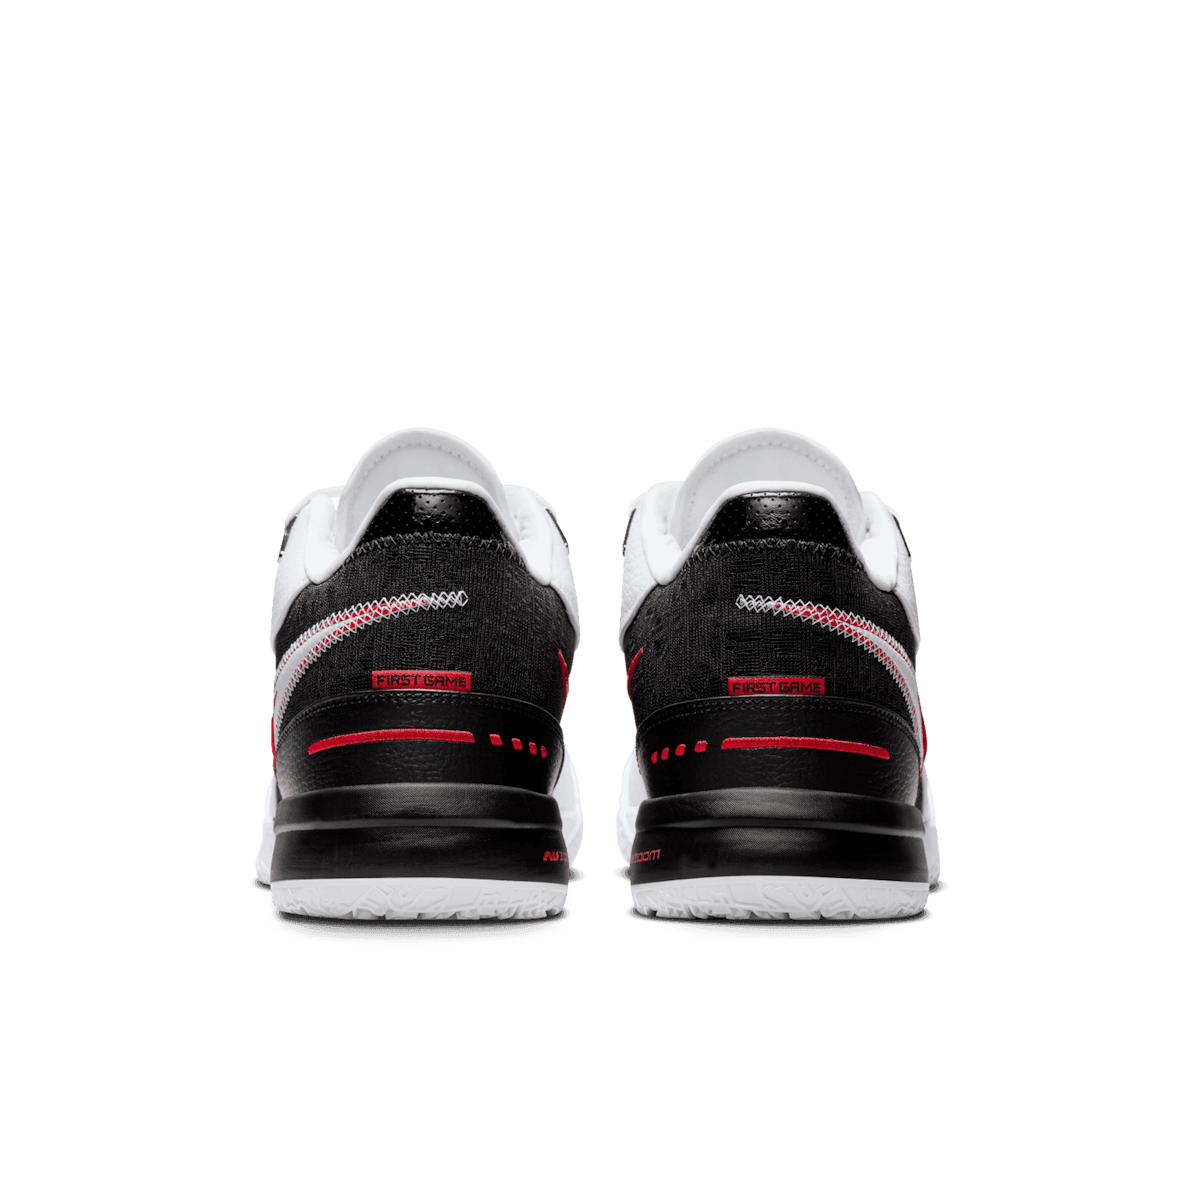 Nike LeBron NXXT Gen First Game - FJ1566-100 Raffles and Release Date